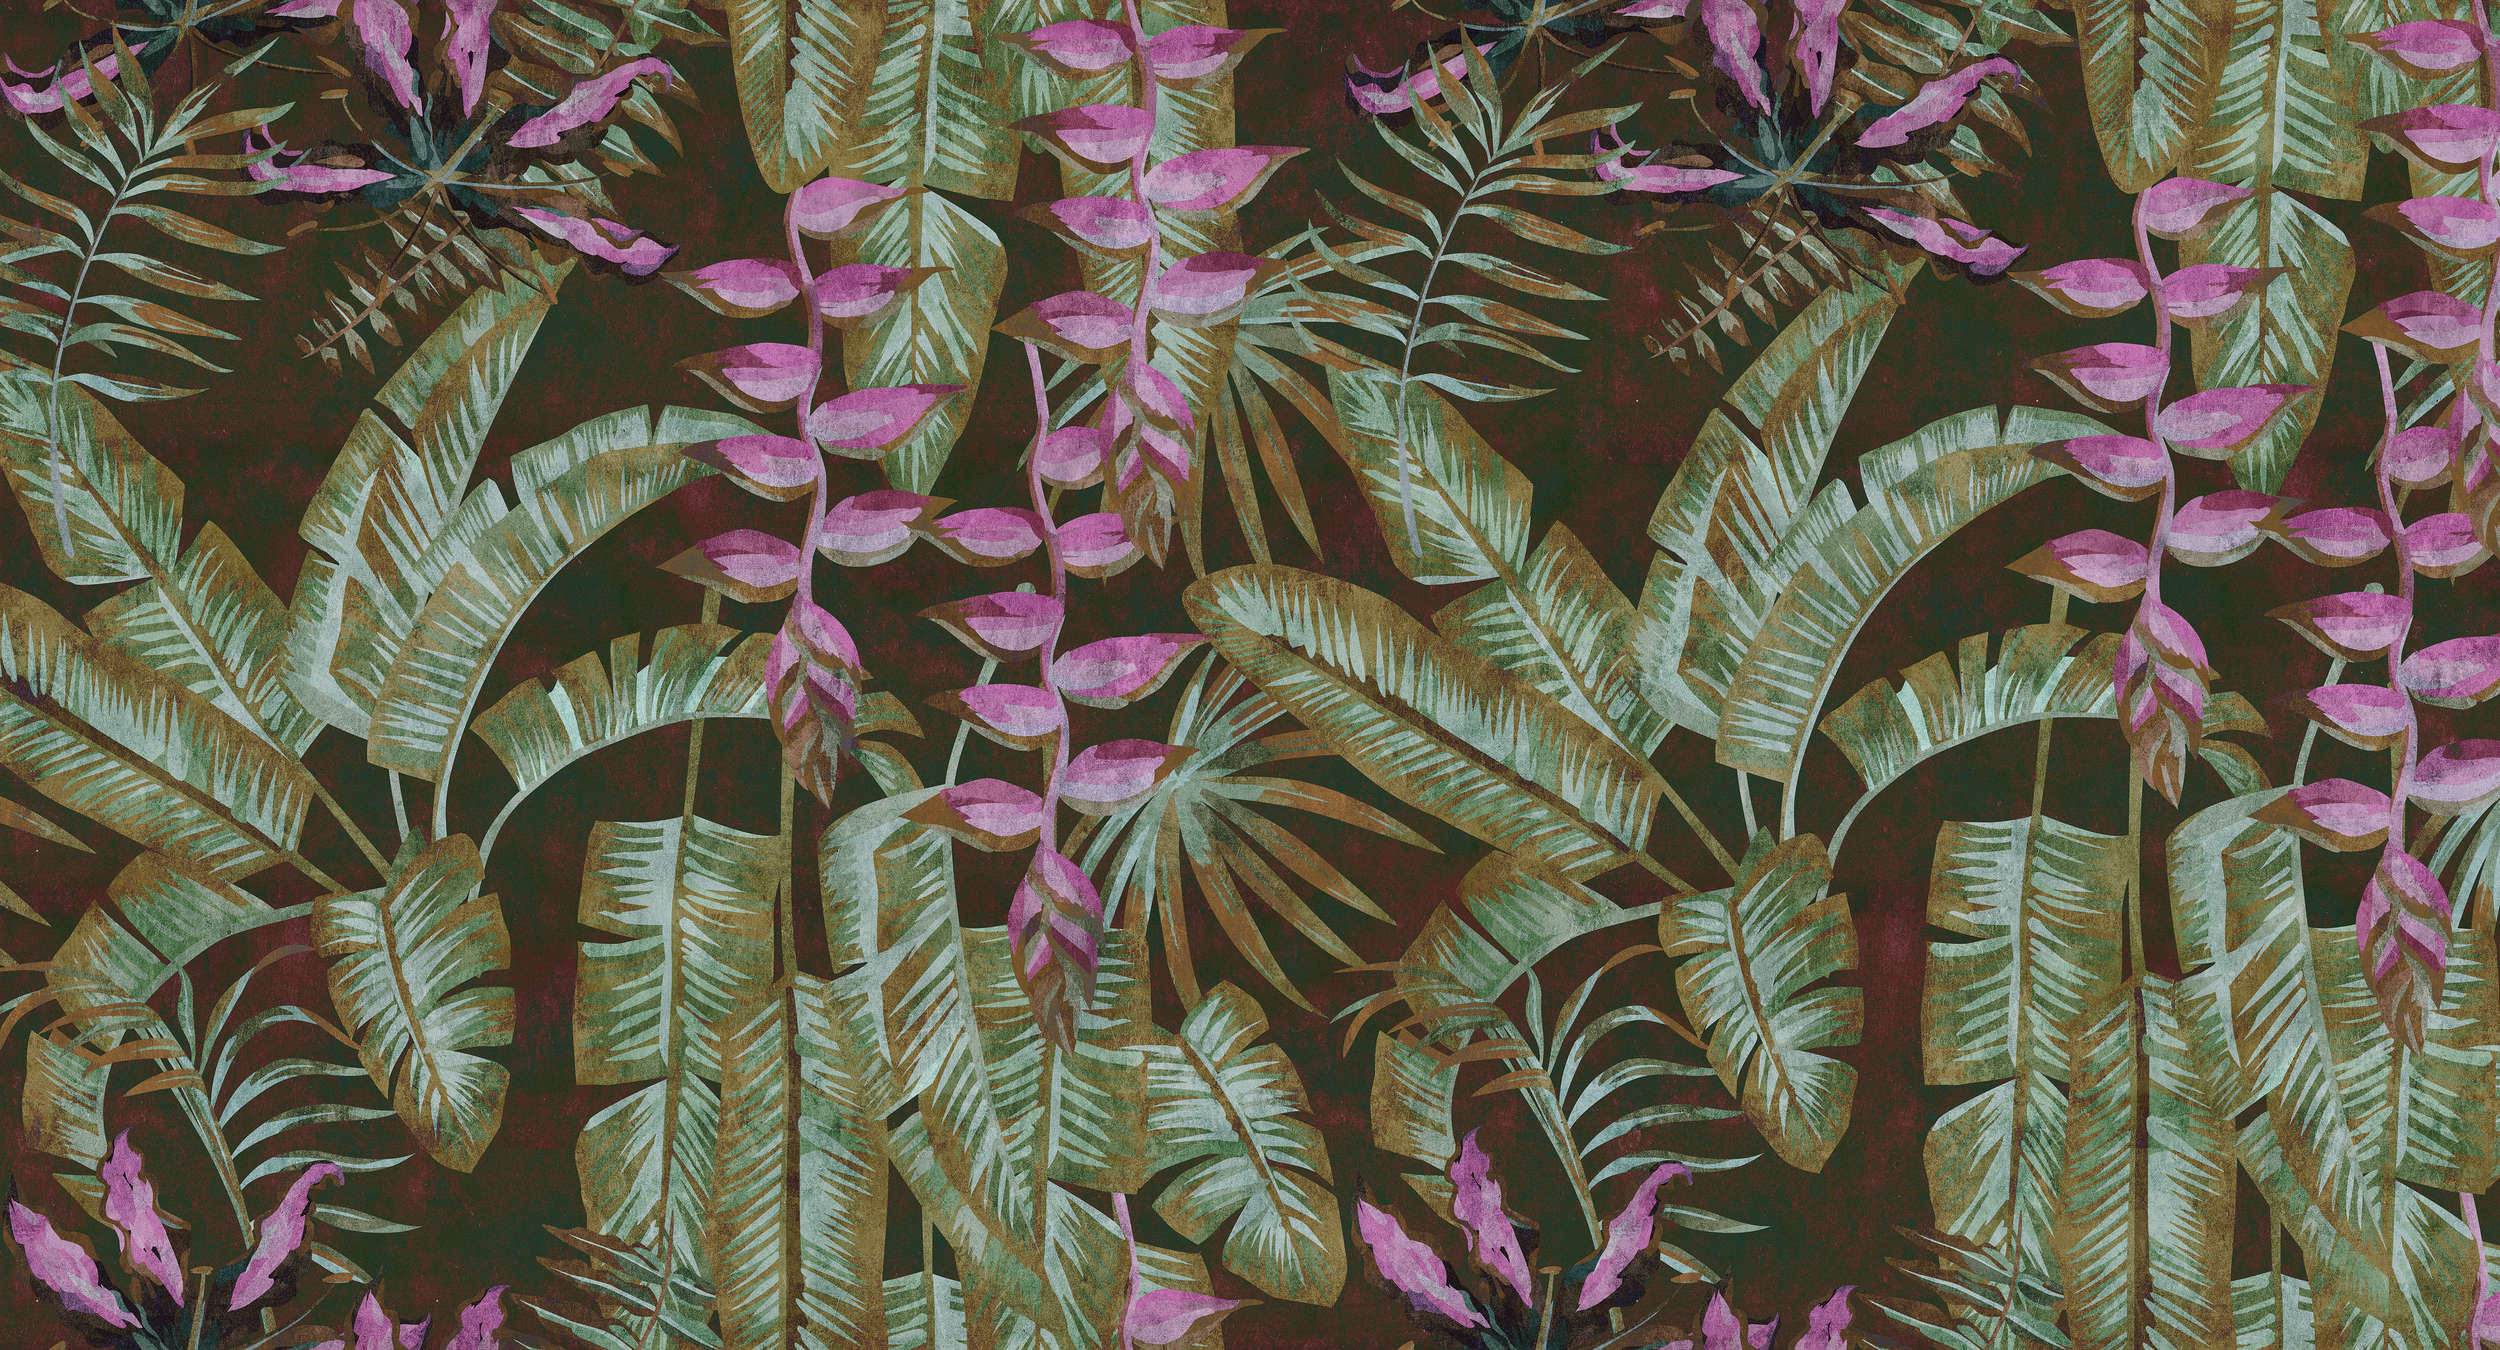             Tropicana 1 - Jungle Wallpaper with Banana Leaves&Farms Blotting Paper Texture - Green, Purple | Texture Non-woven
        